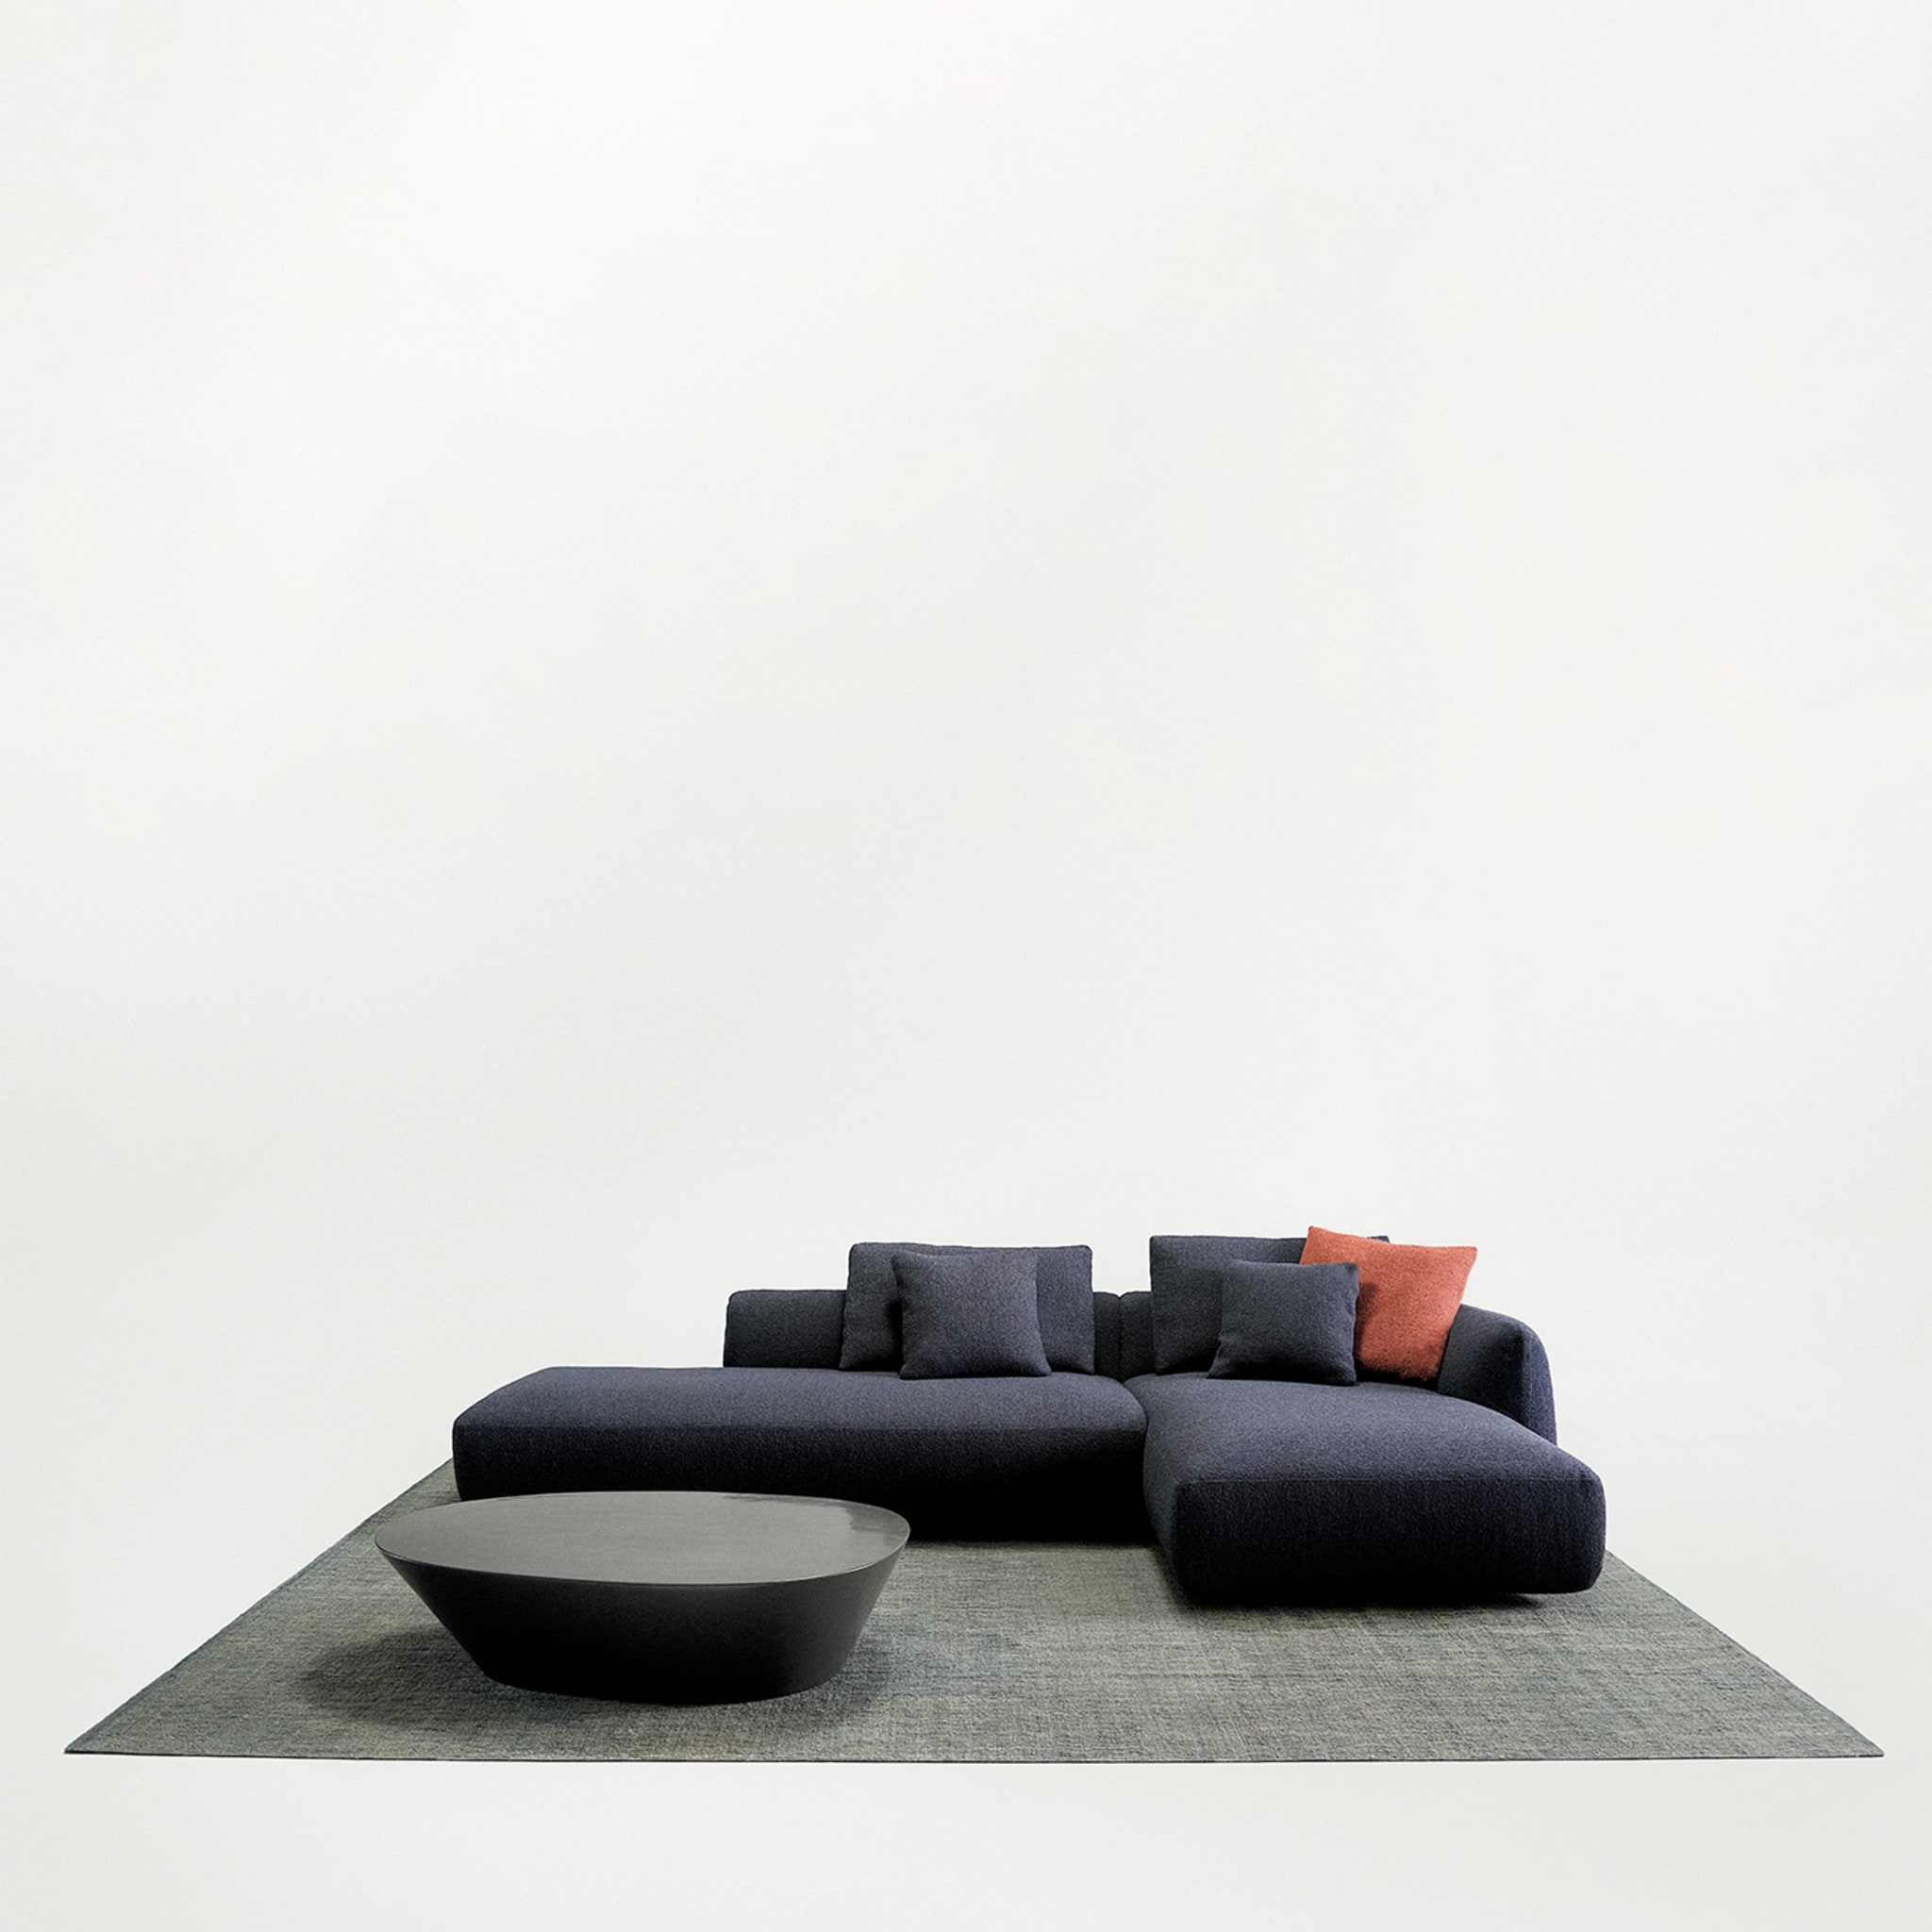 Naxos L-förmiges modulares blaues sofa von Ludovica + Roberto Palomba - Alternative Ansicht 1